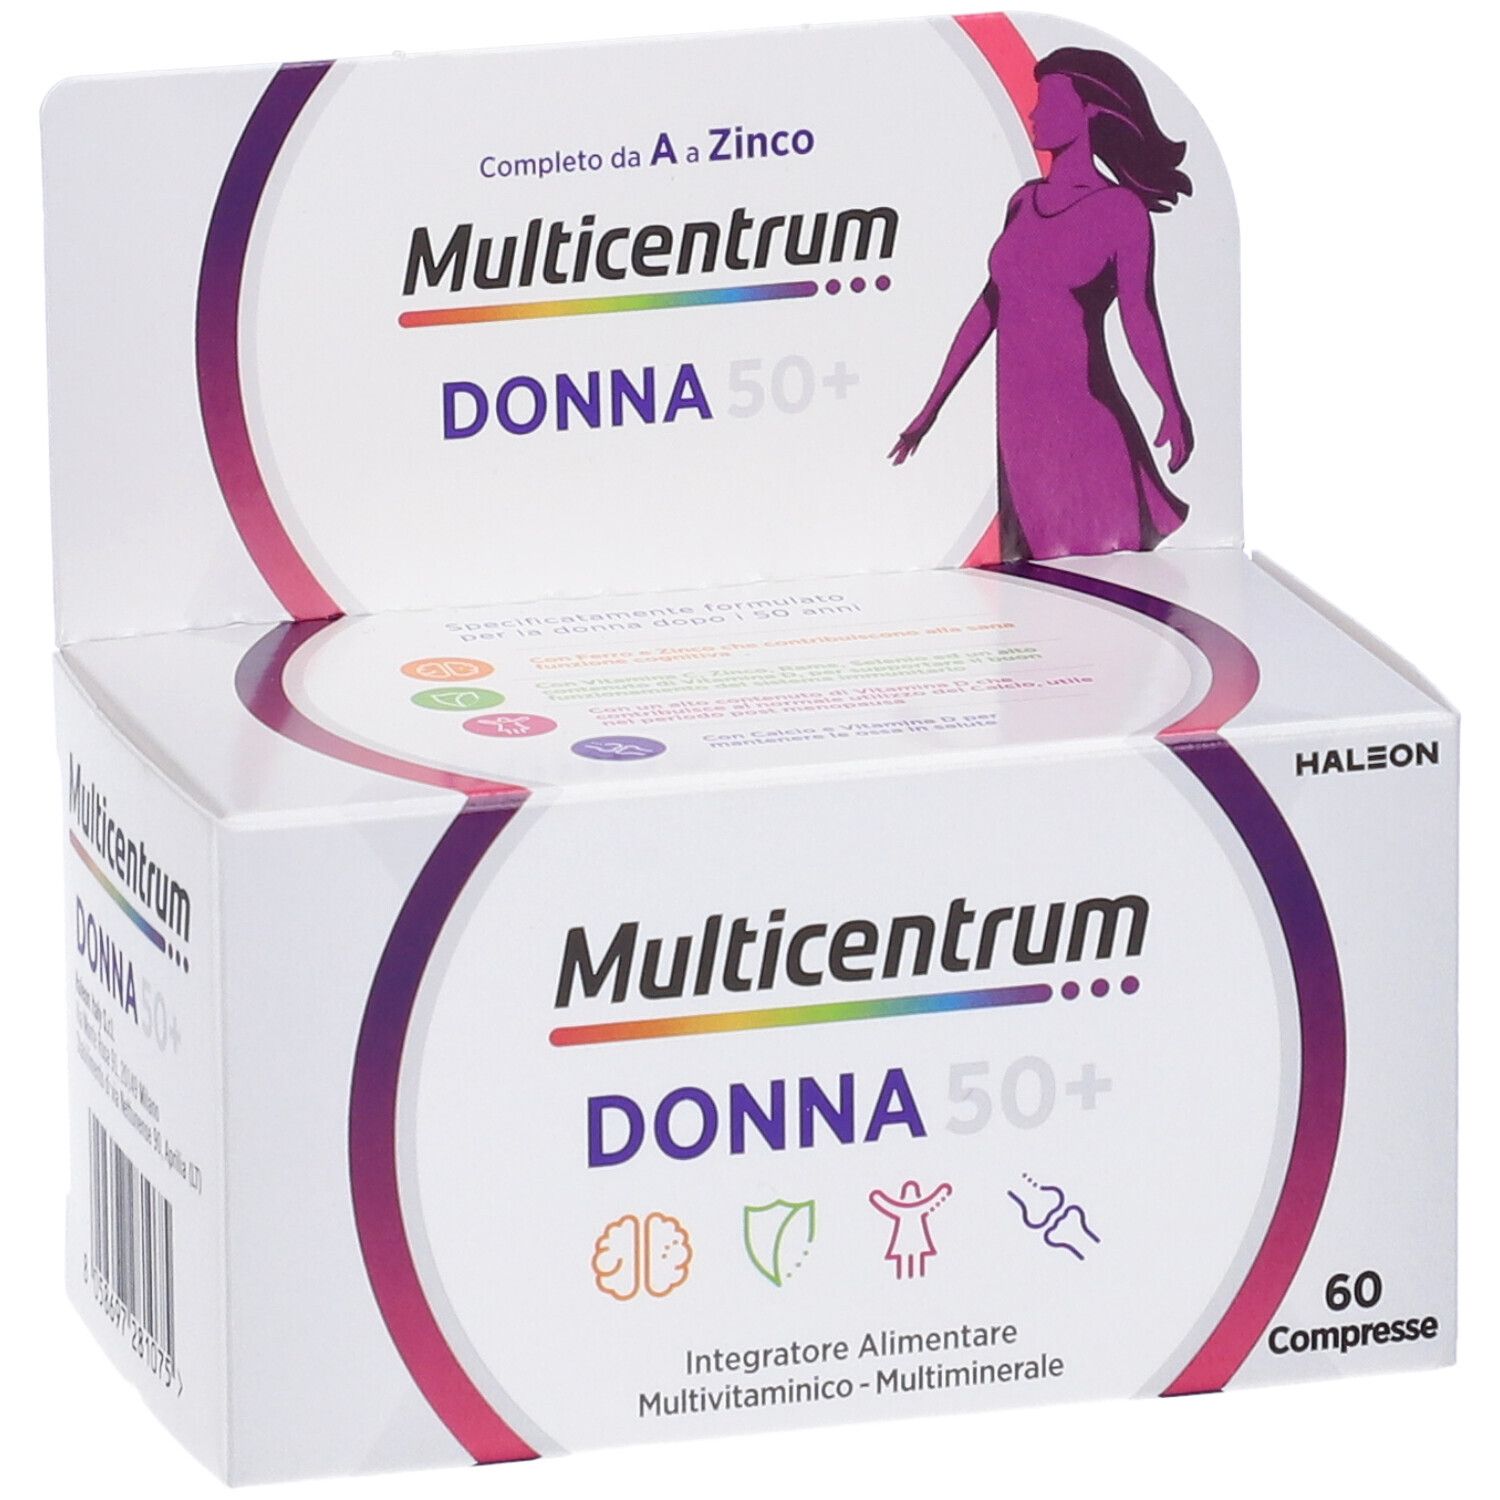 Multicentrum donna 50+ Multivitaminico per Donne 50+